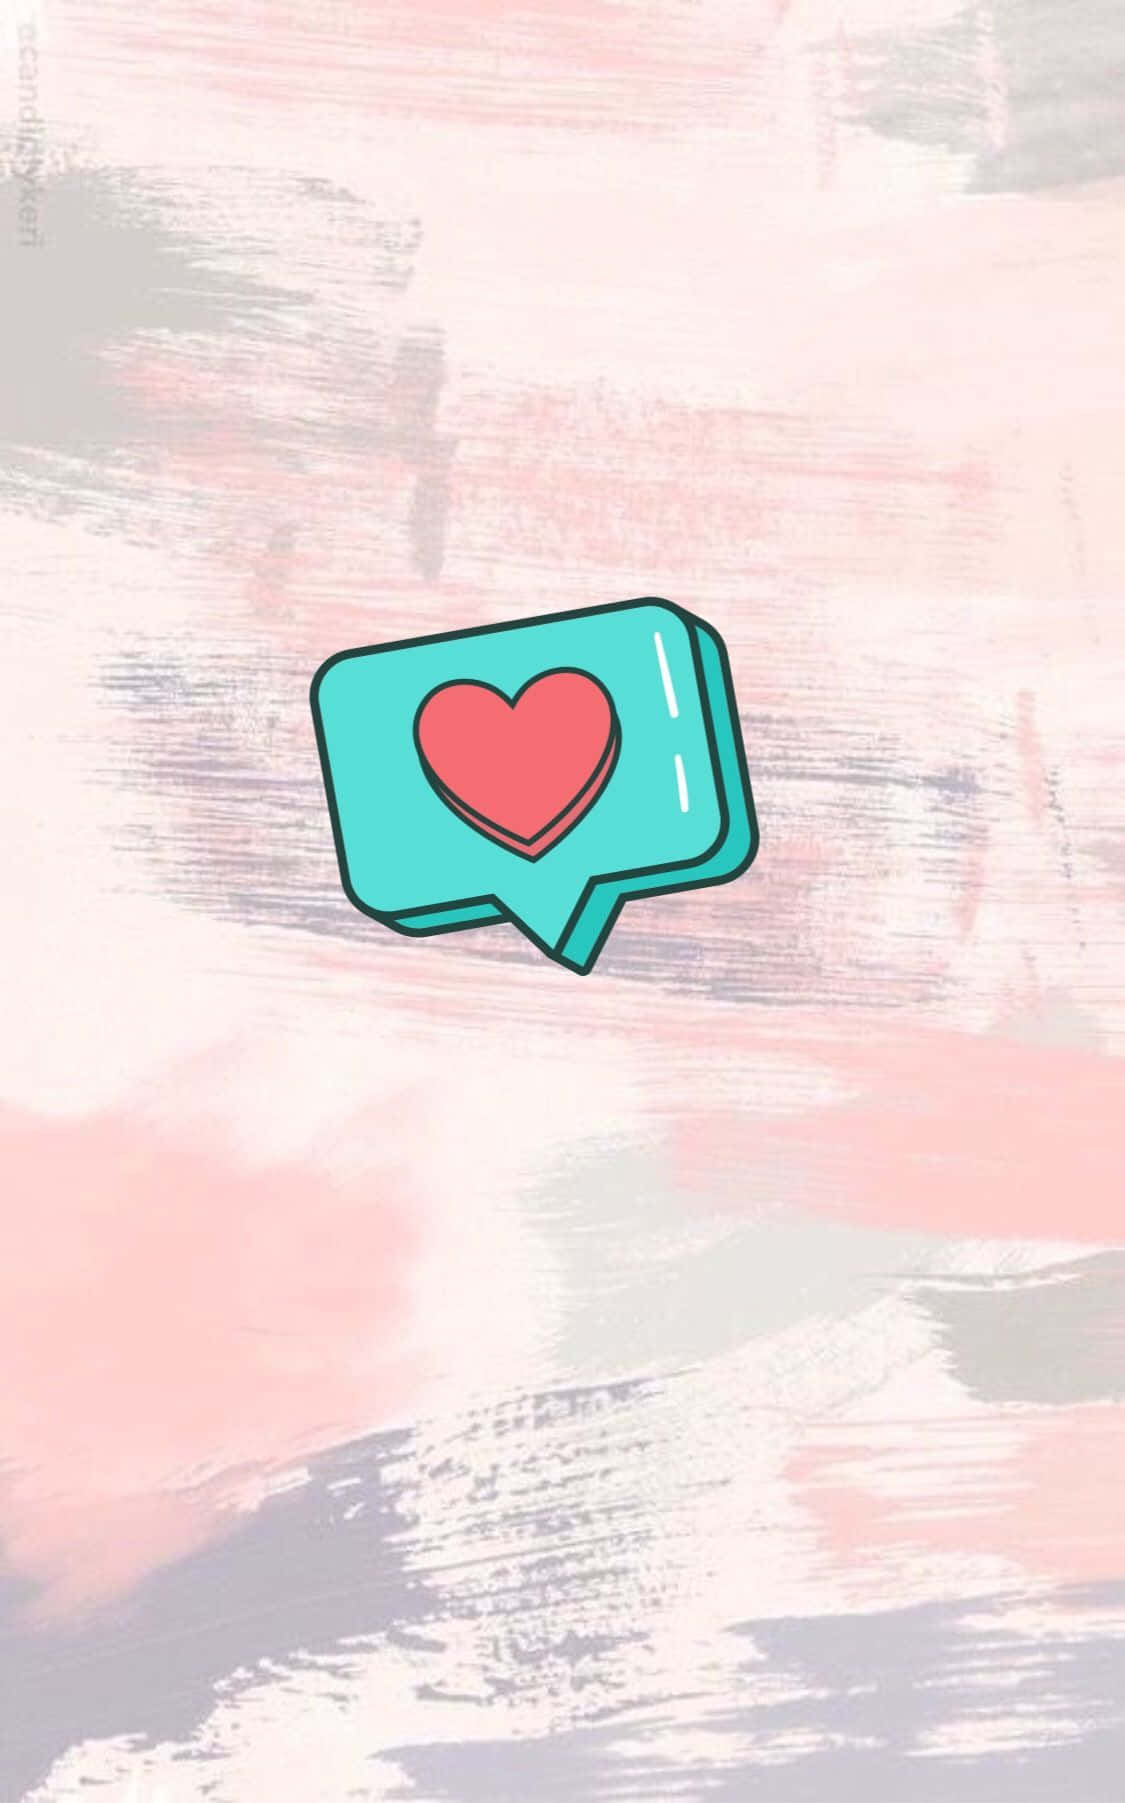 Heart Inside Bubble For Instagram Stories Wallpaper